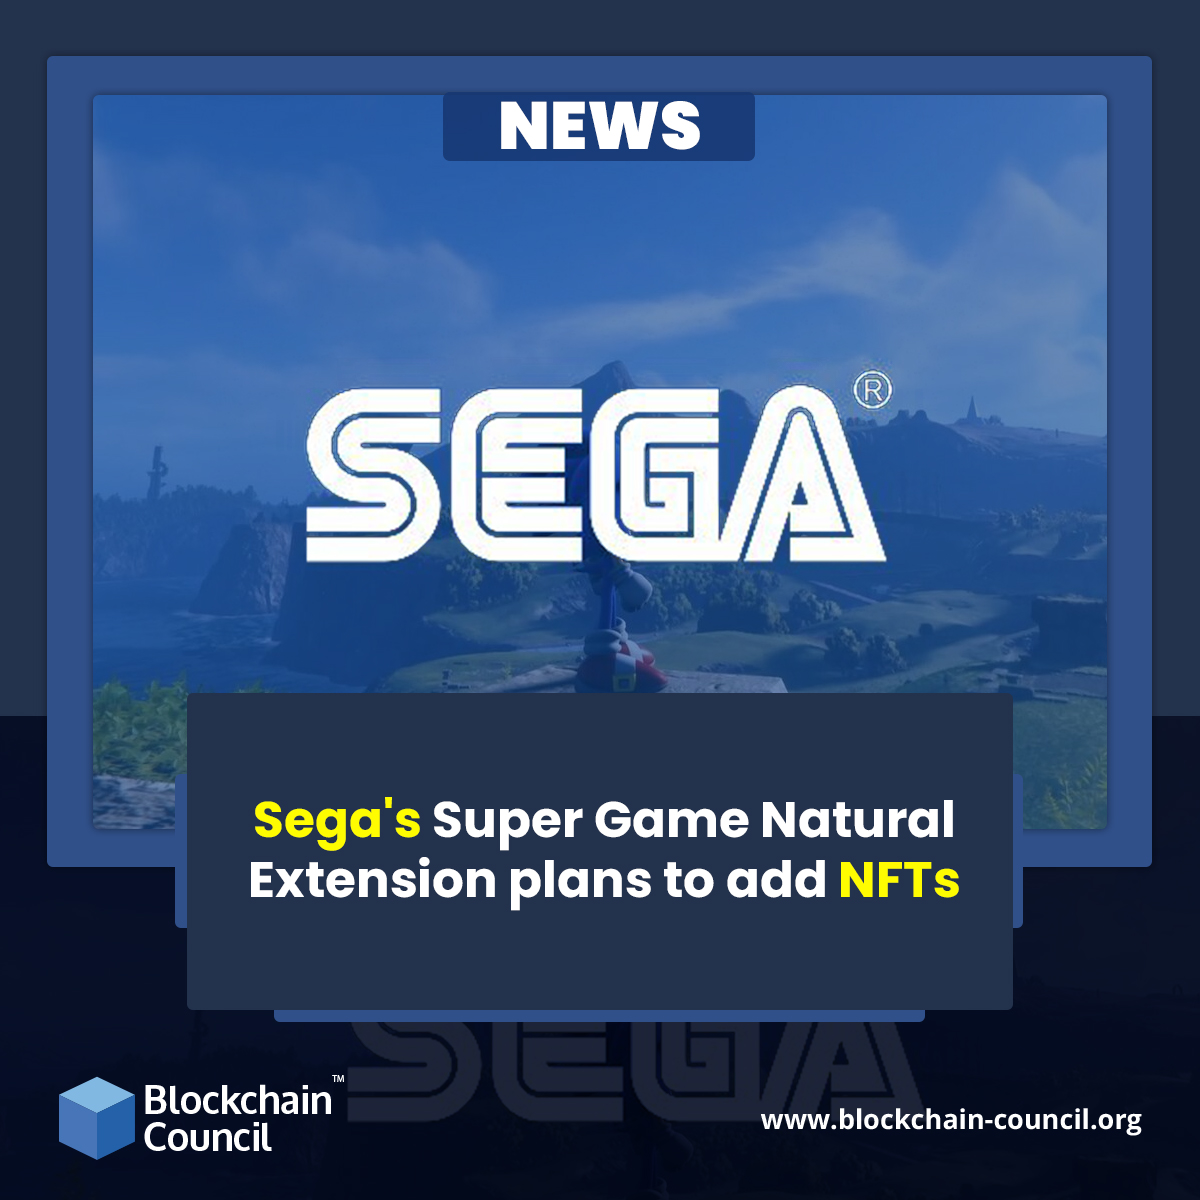 Sega's Super Game Natural Extension plans to add NFTs